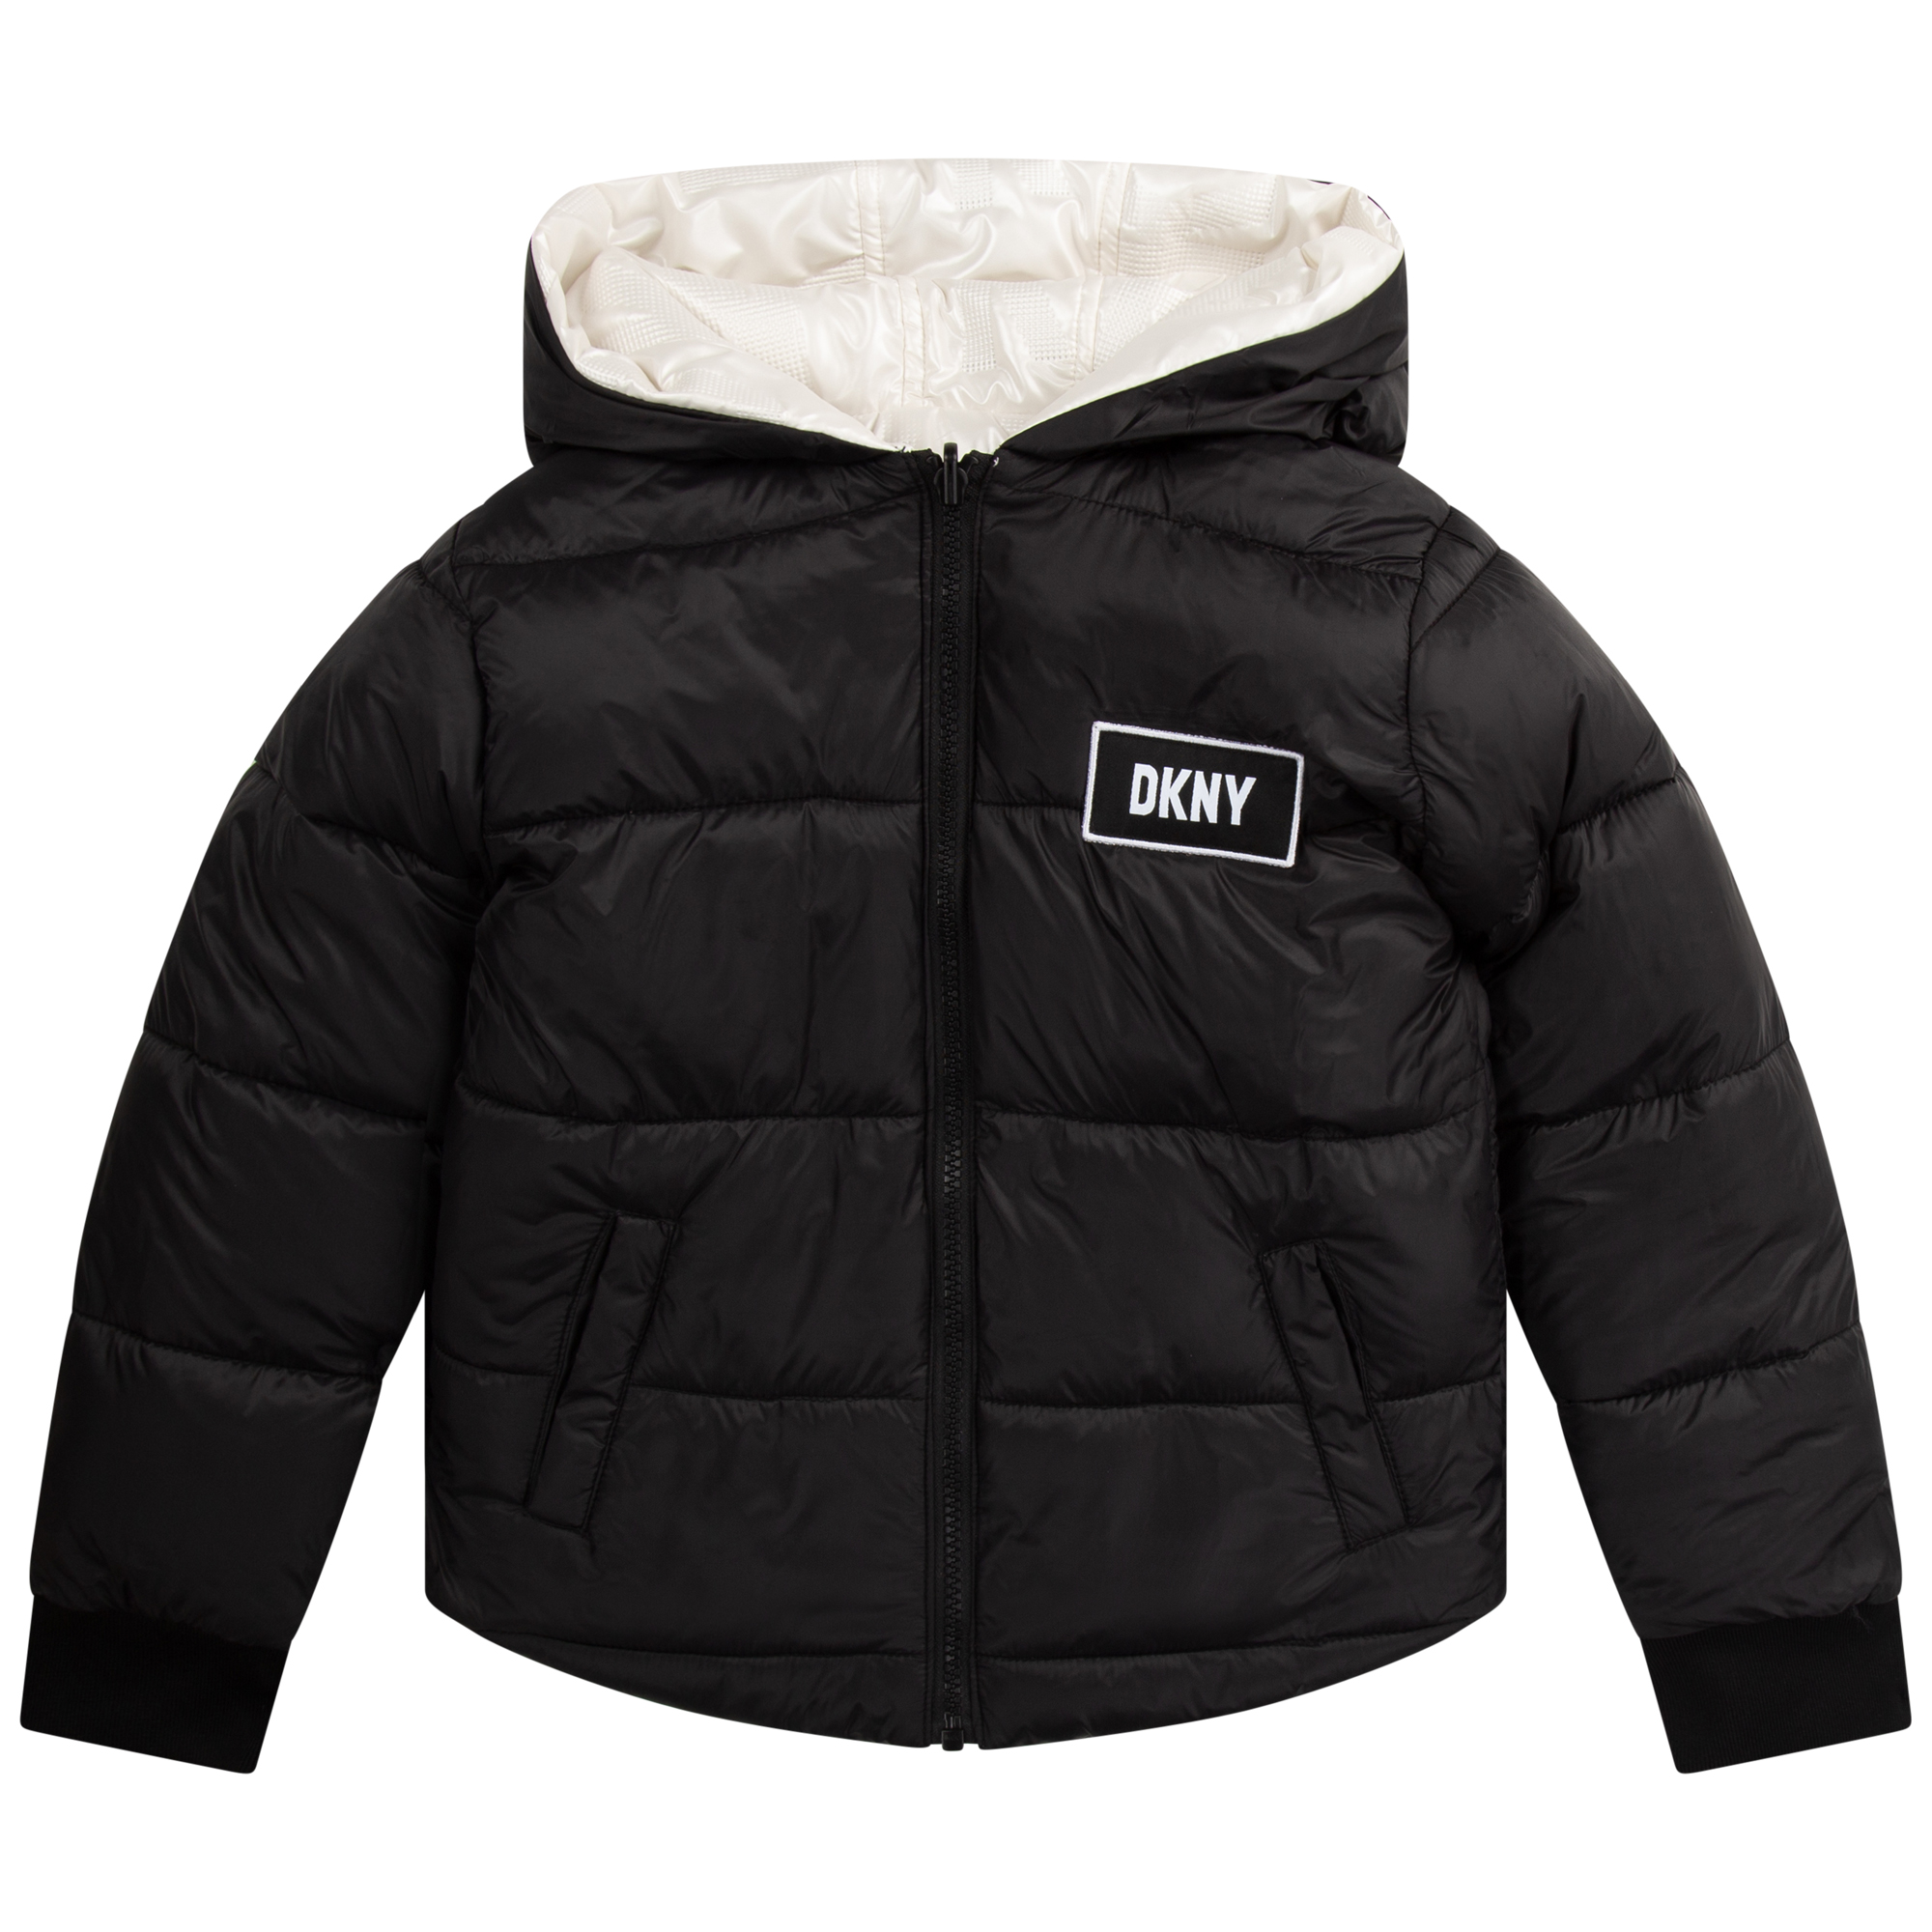 Stadium Length Quilted Windbreaker Anorak Parka Jacket DKNY Girls’ Winter Coat 4-16 